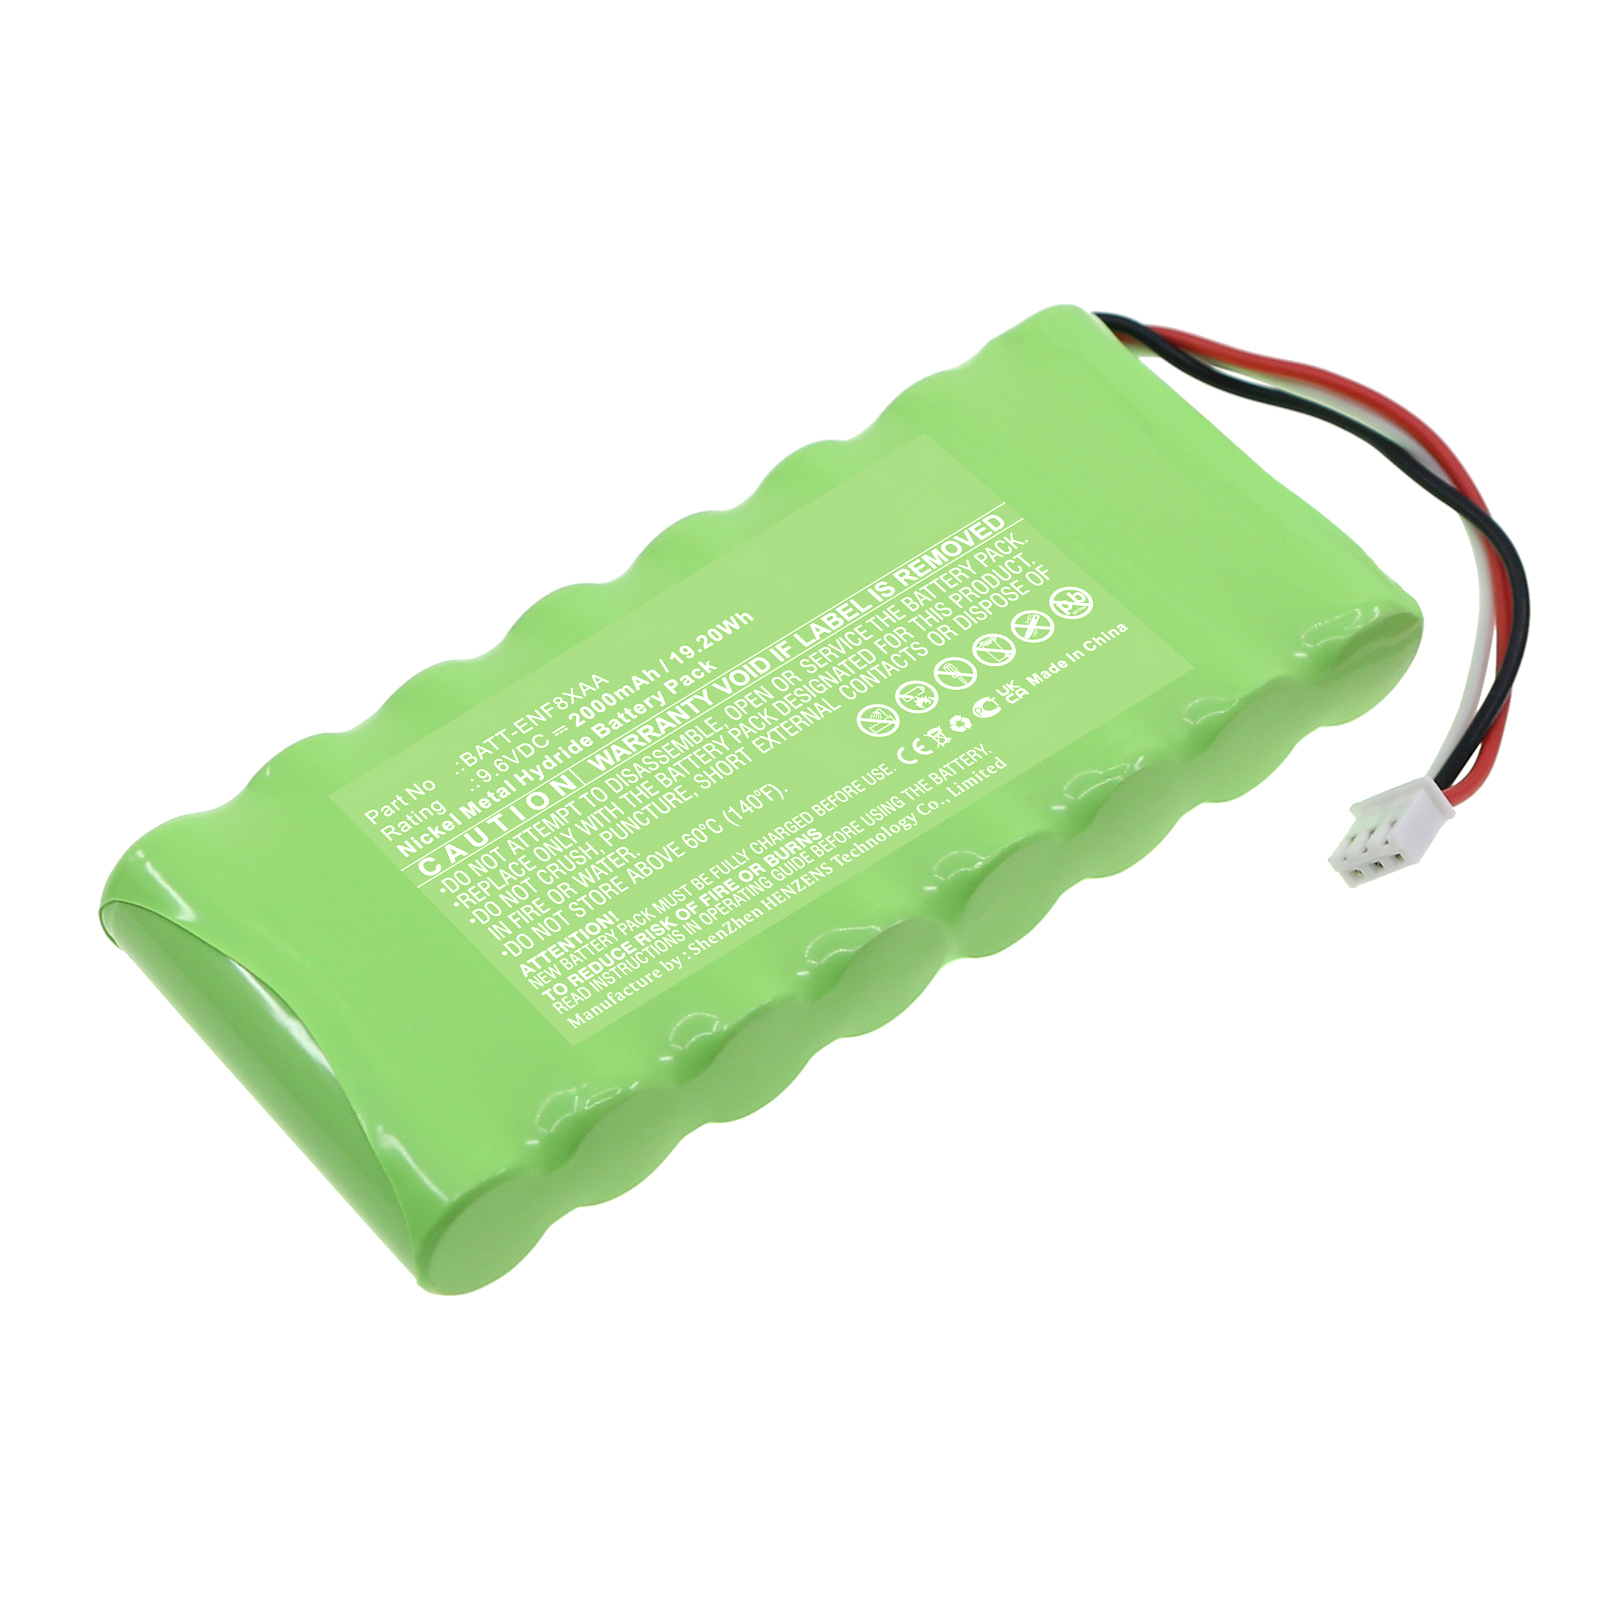 Synergy Digital Alarm System Battery, Compatible with Pyronix BATT-ENF8XAA Alarm System Battery (Ni-MH, 9.6V, 2000mAh)